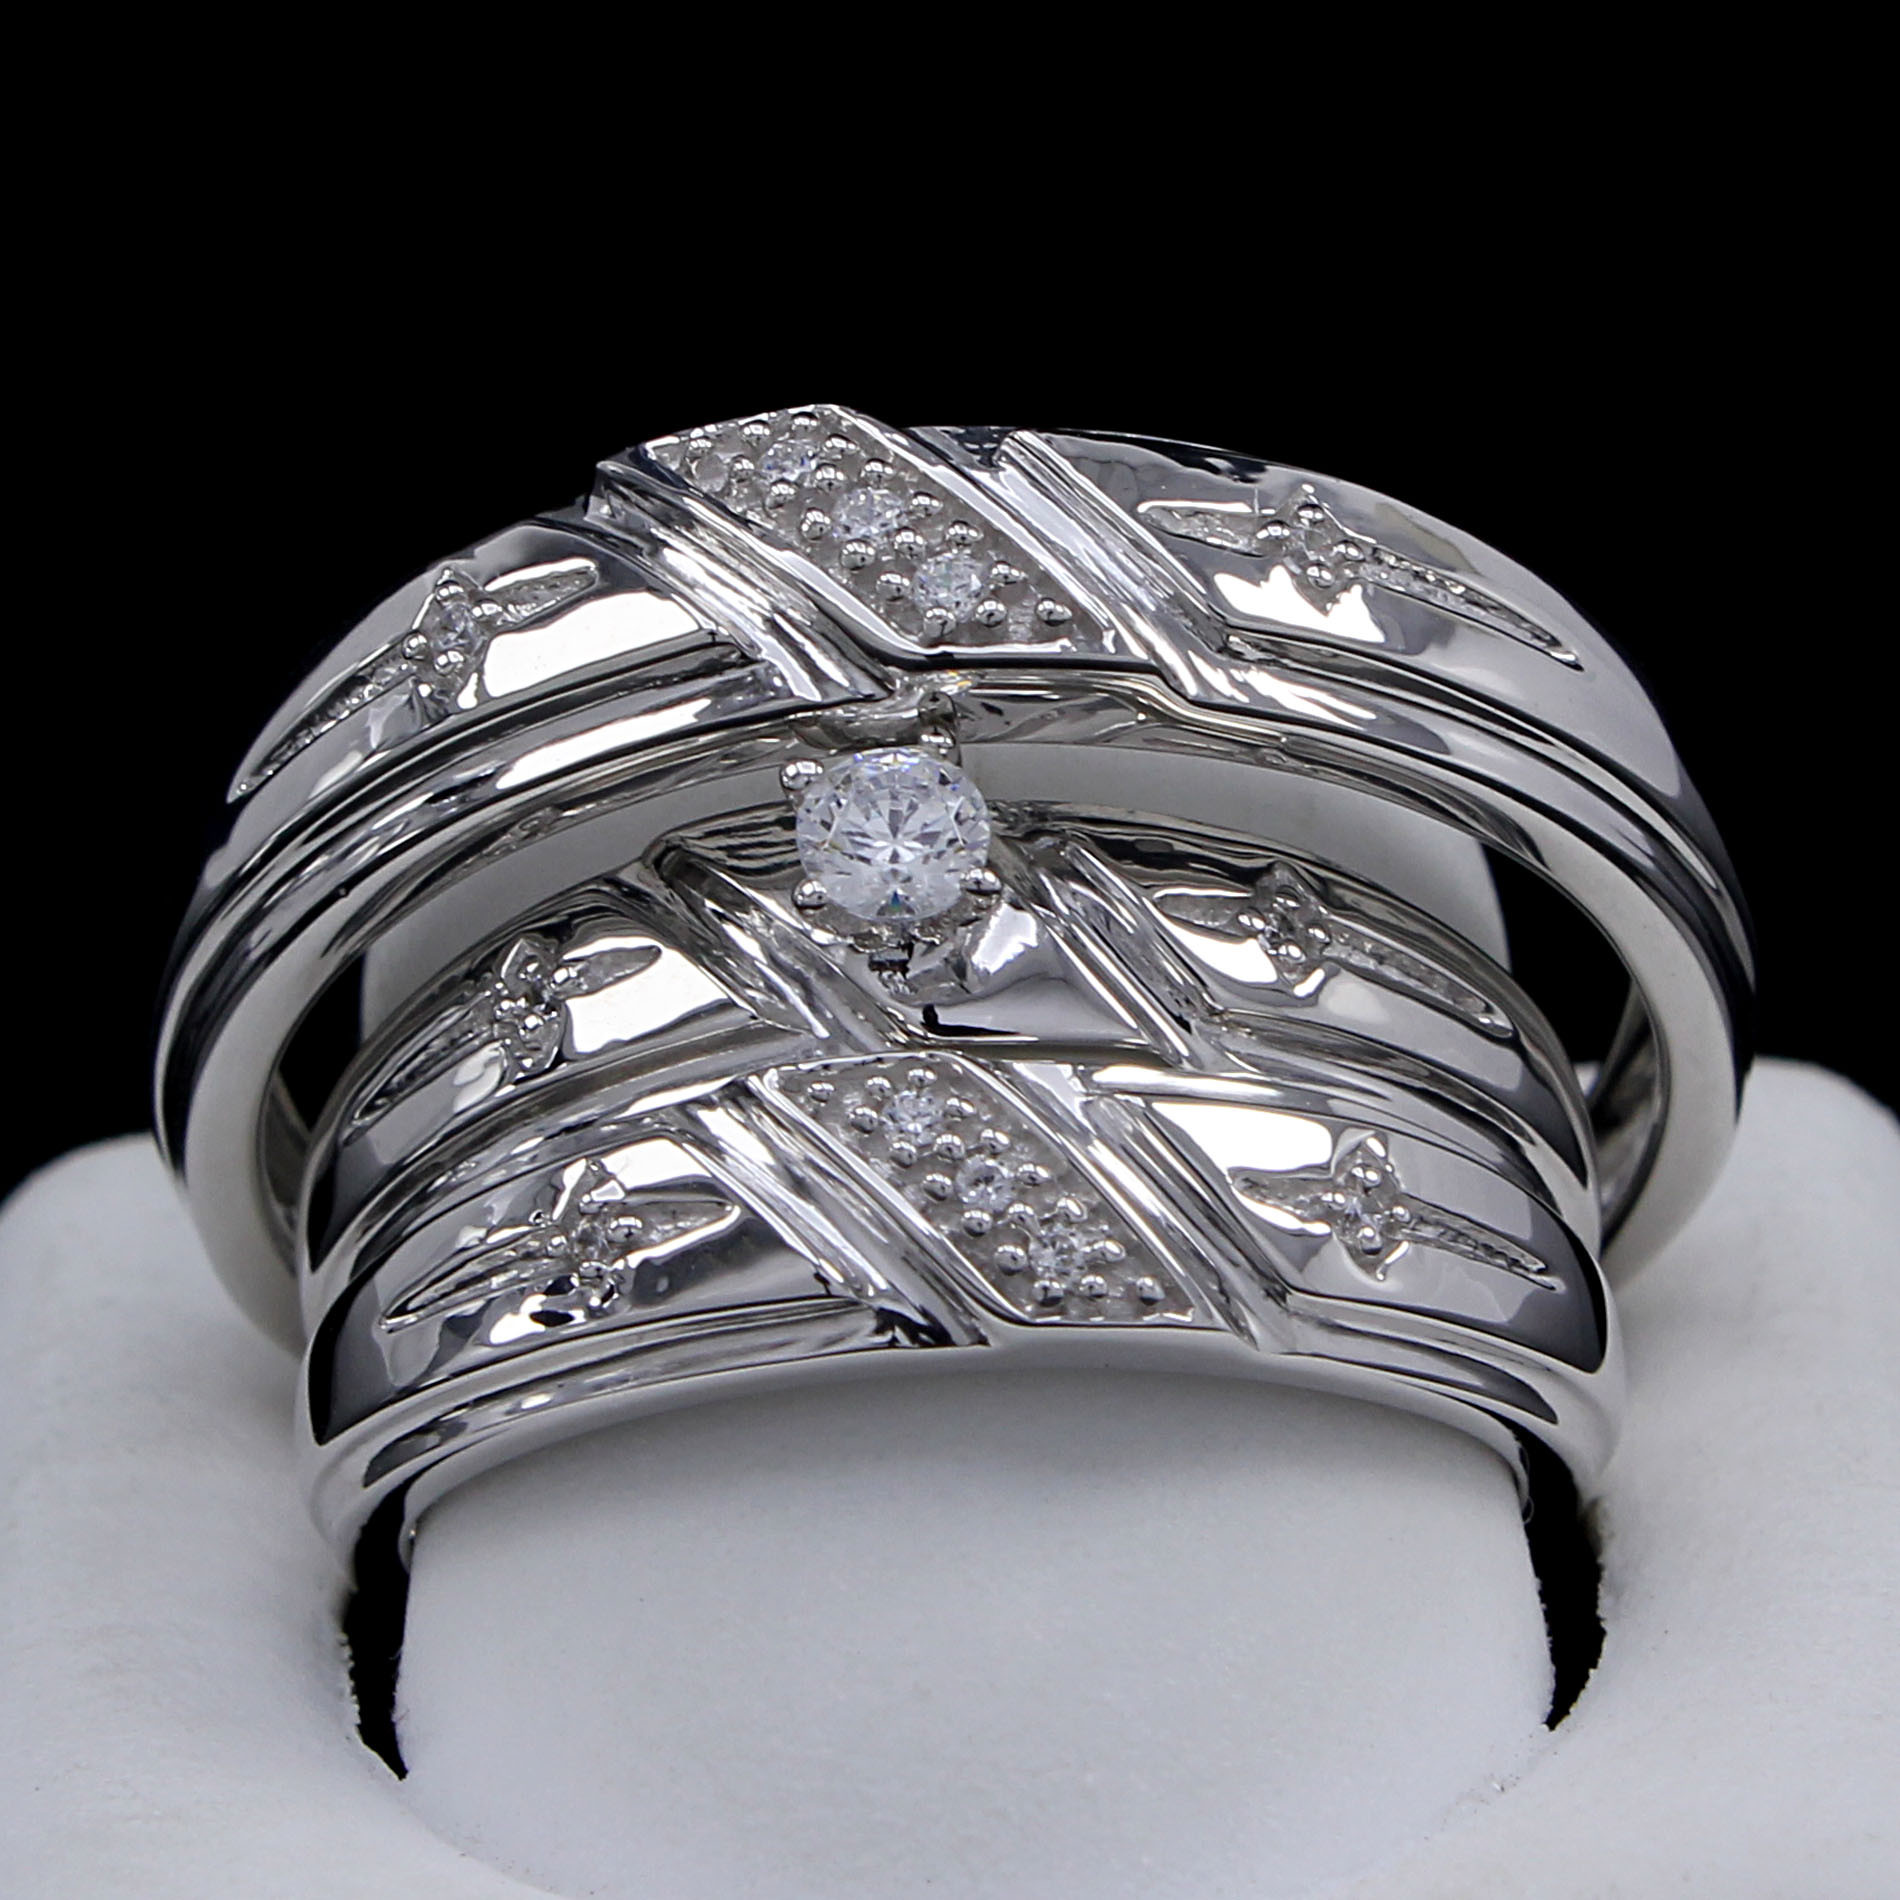 Christian Wedding Rings Sets
 Diamond 3 ring 20 carat wedding band set Cross Christian